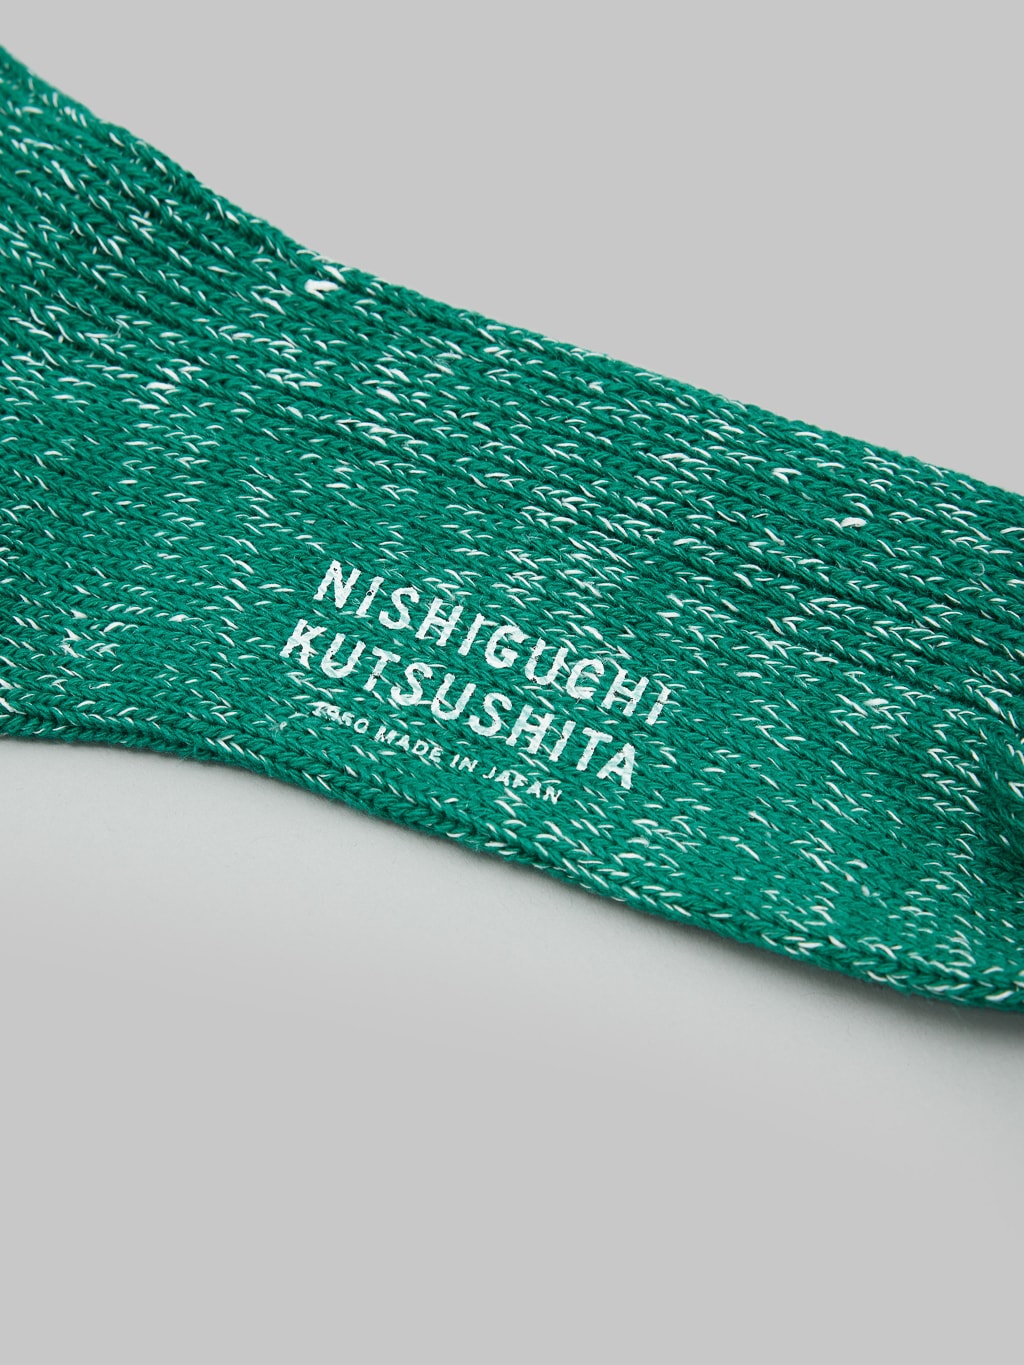 nishiguchi kutsushita hemp cotton ribbed socks park green stamped brand logo